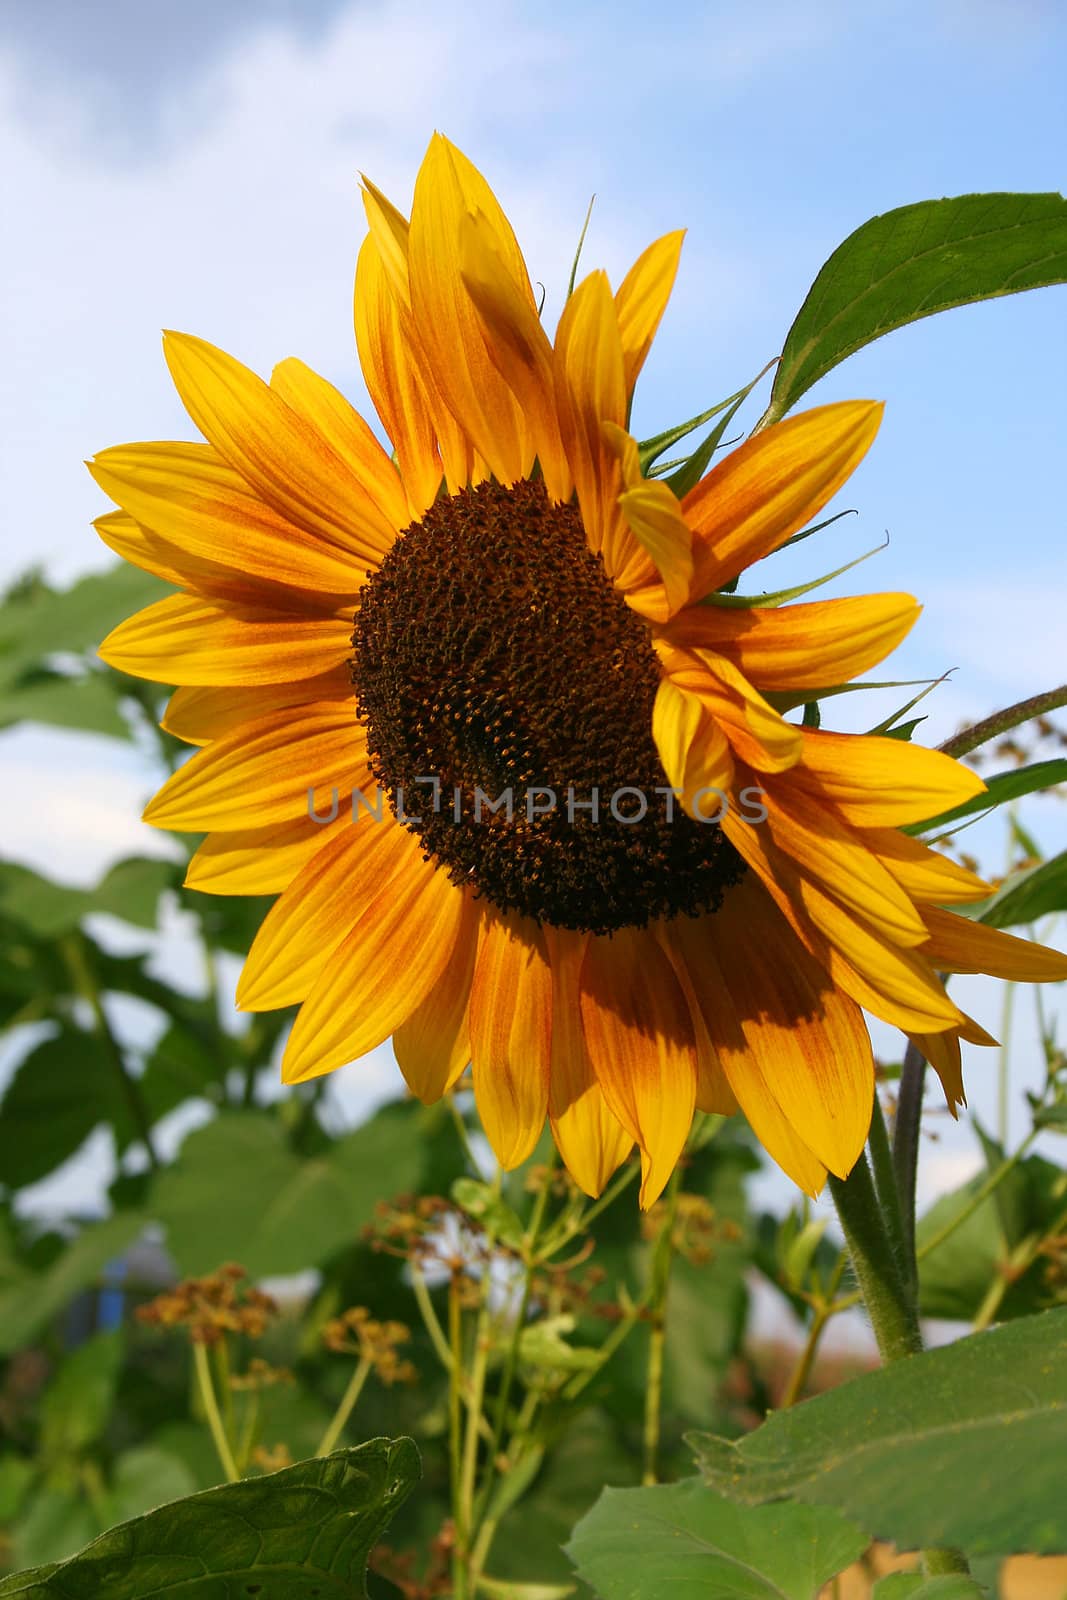 Sunflower by Brightdawn